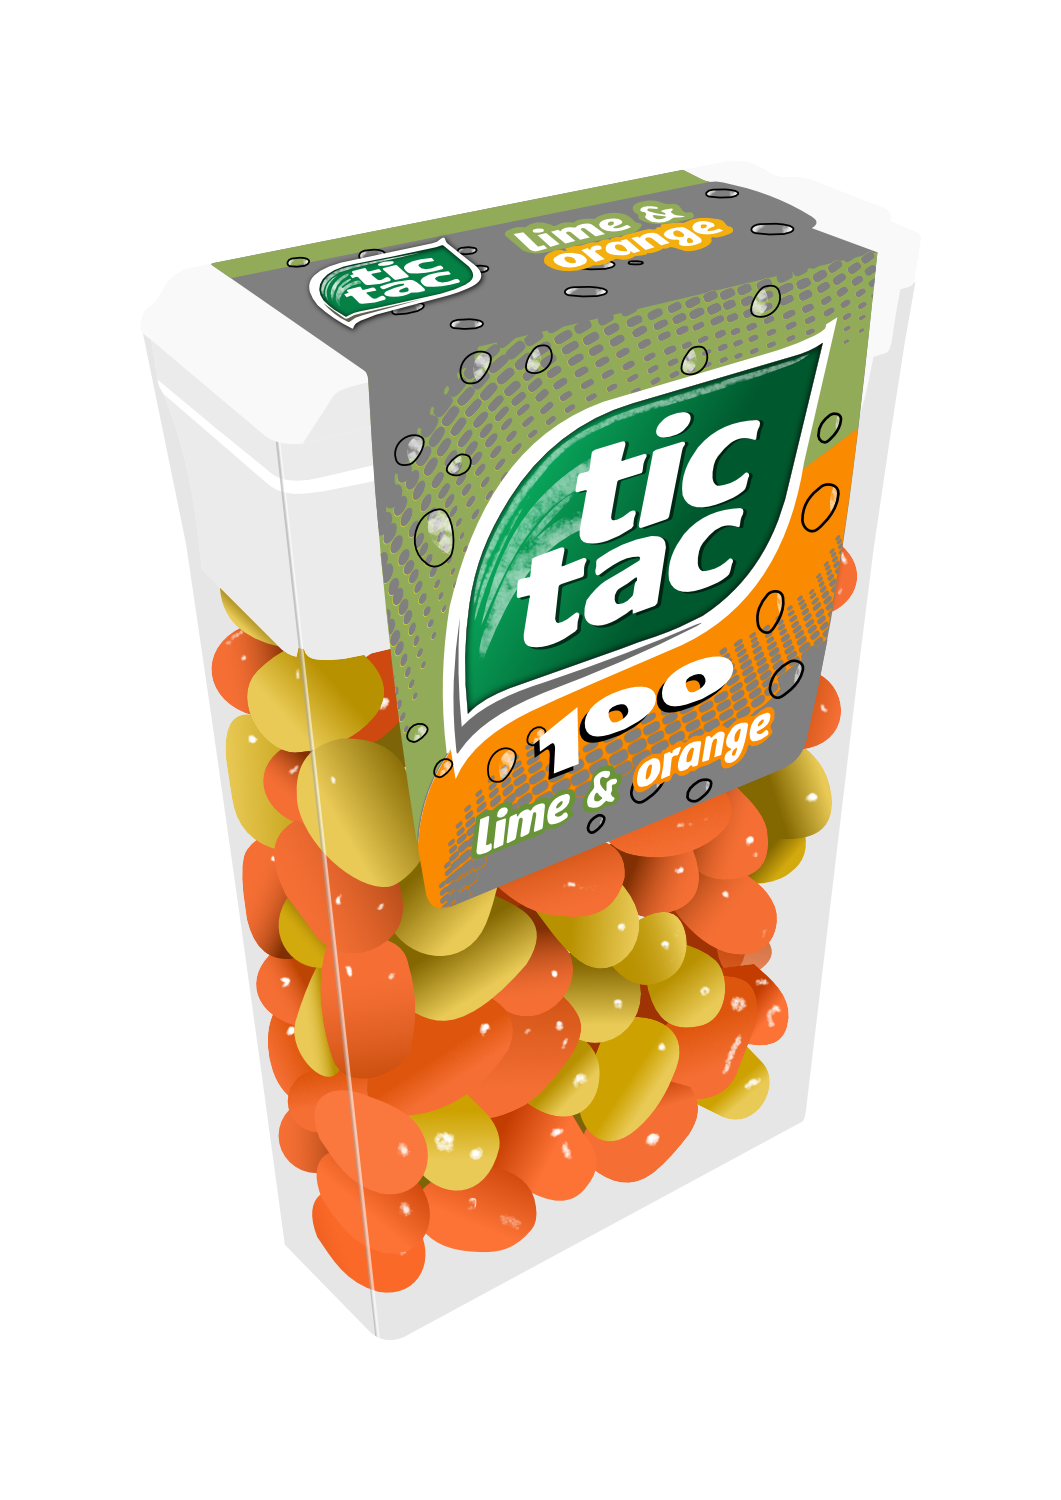 Tic Tac
Tic Tac box with sweets
Keywords: TicTac Tic Tac Box Affinity Designer SVG